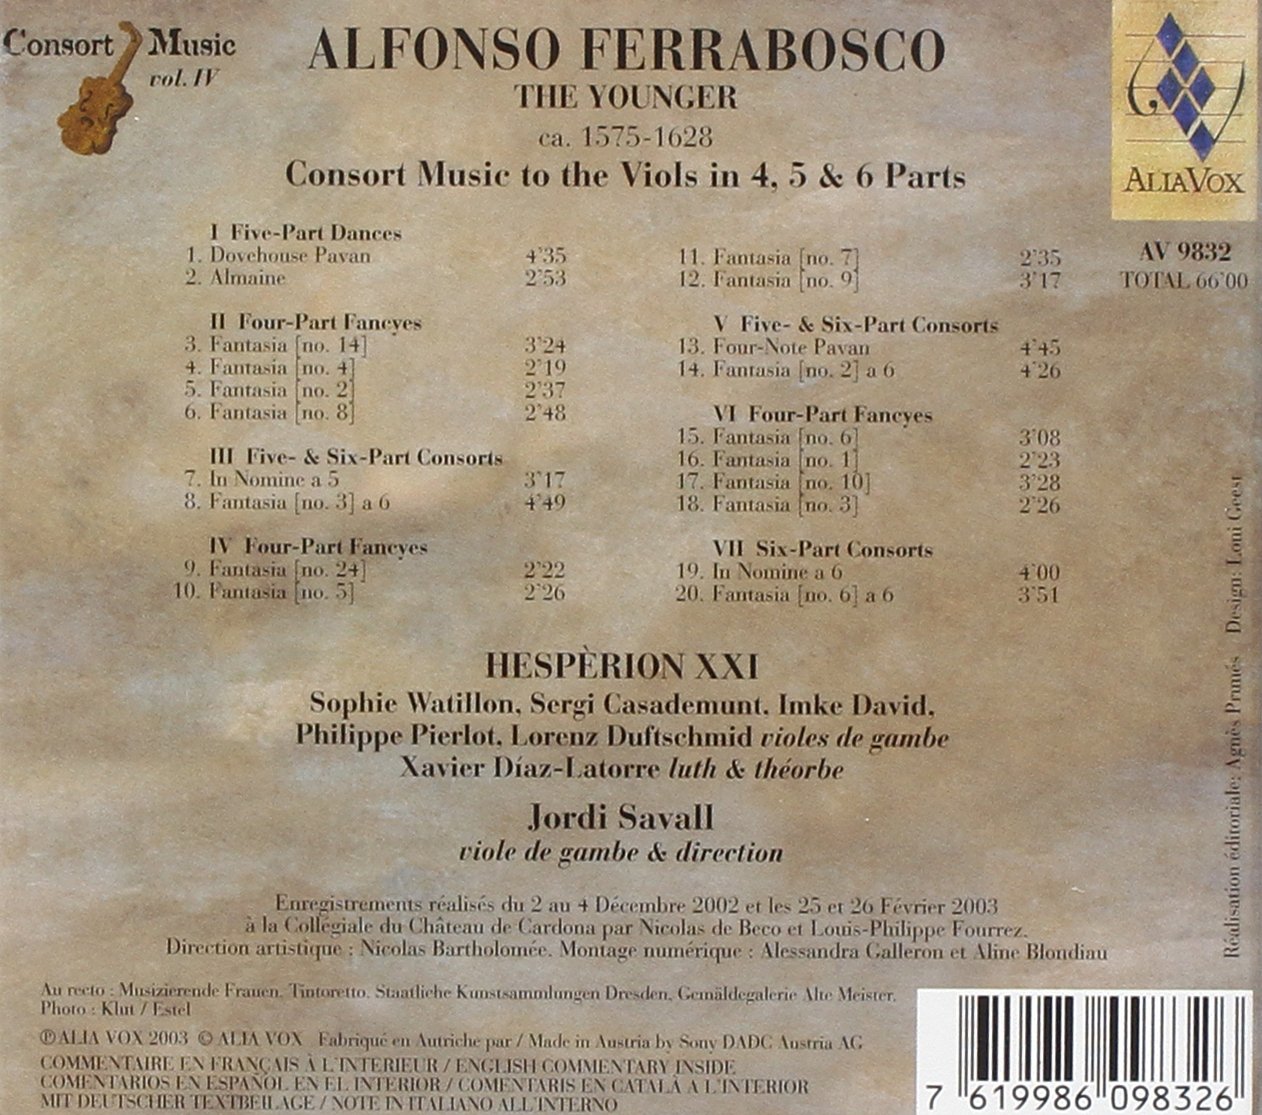 Jordi Savall 알폰소 페라보스코 2세: 콘소트 뮤직 투 더 비올스 인 4-6 성부 (Ferrabosco, A II: Consort Music for viols in 4-6 parts)